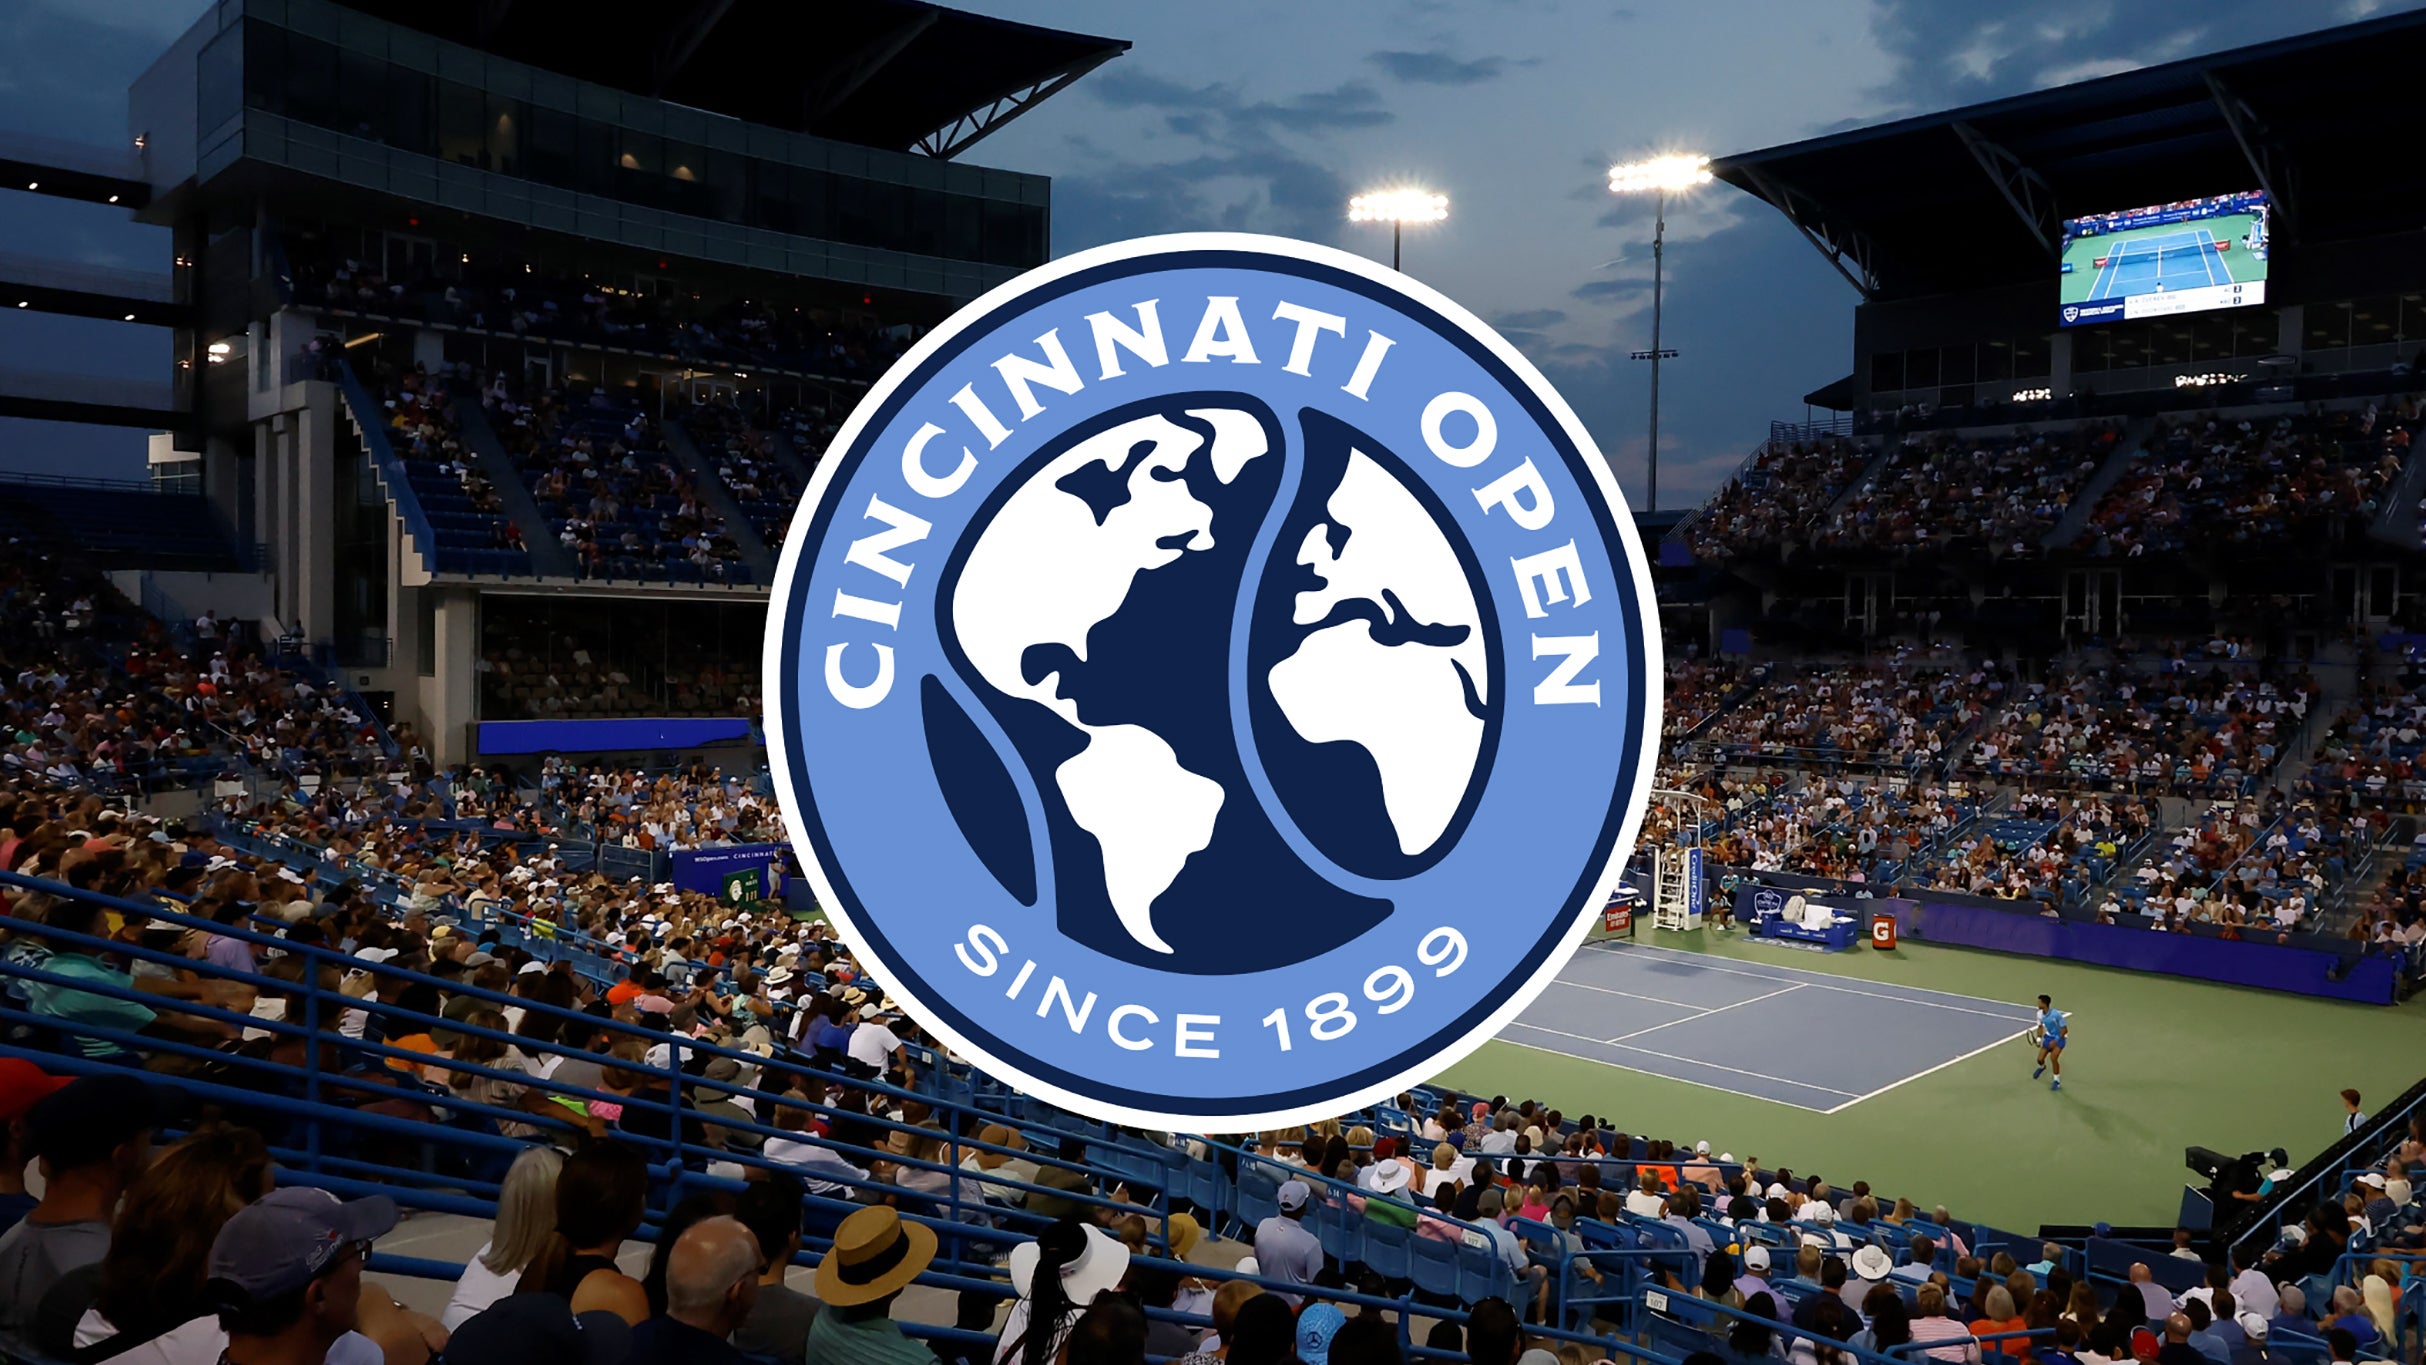 Session 1: Cincinnati Open at Lindner Family Tennis Center